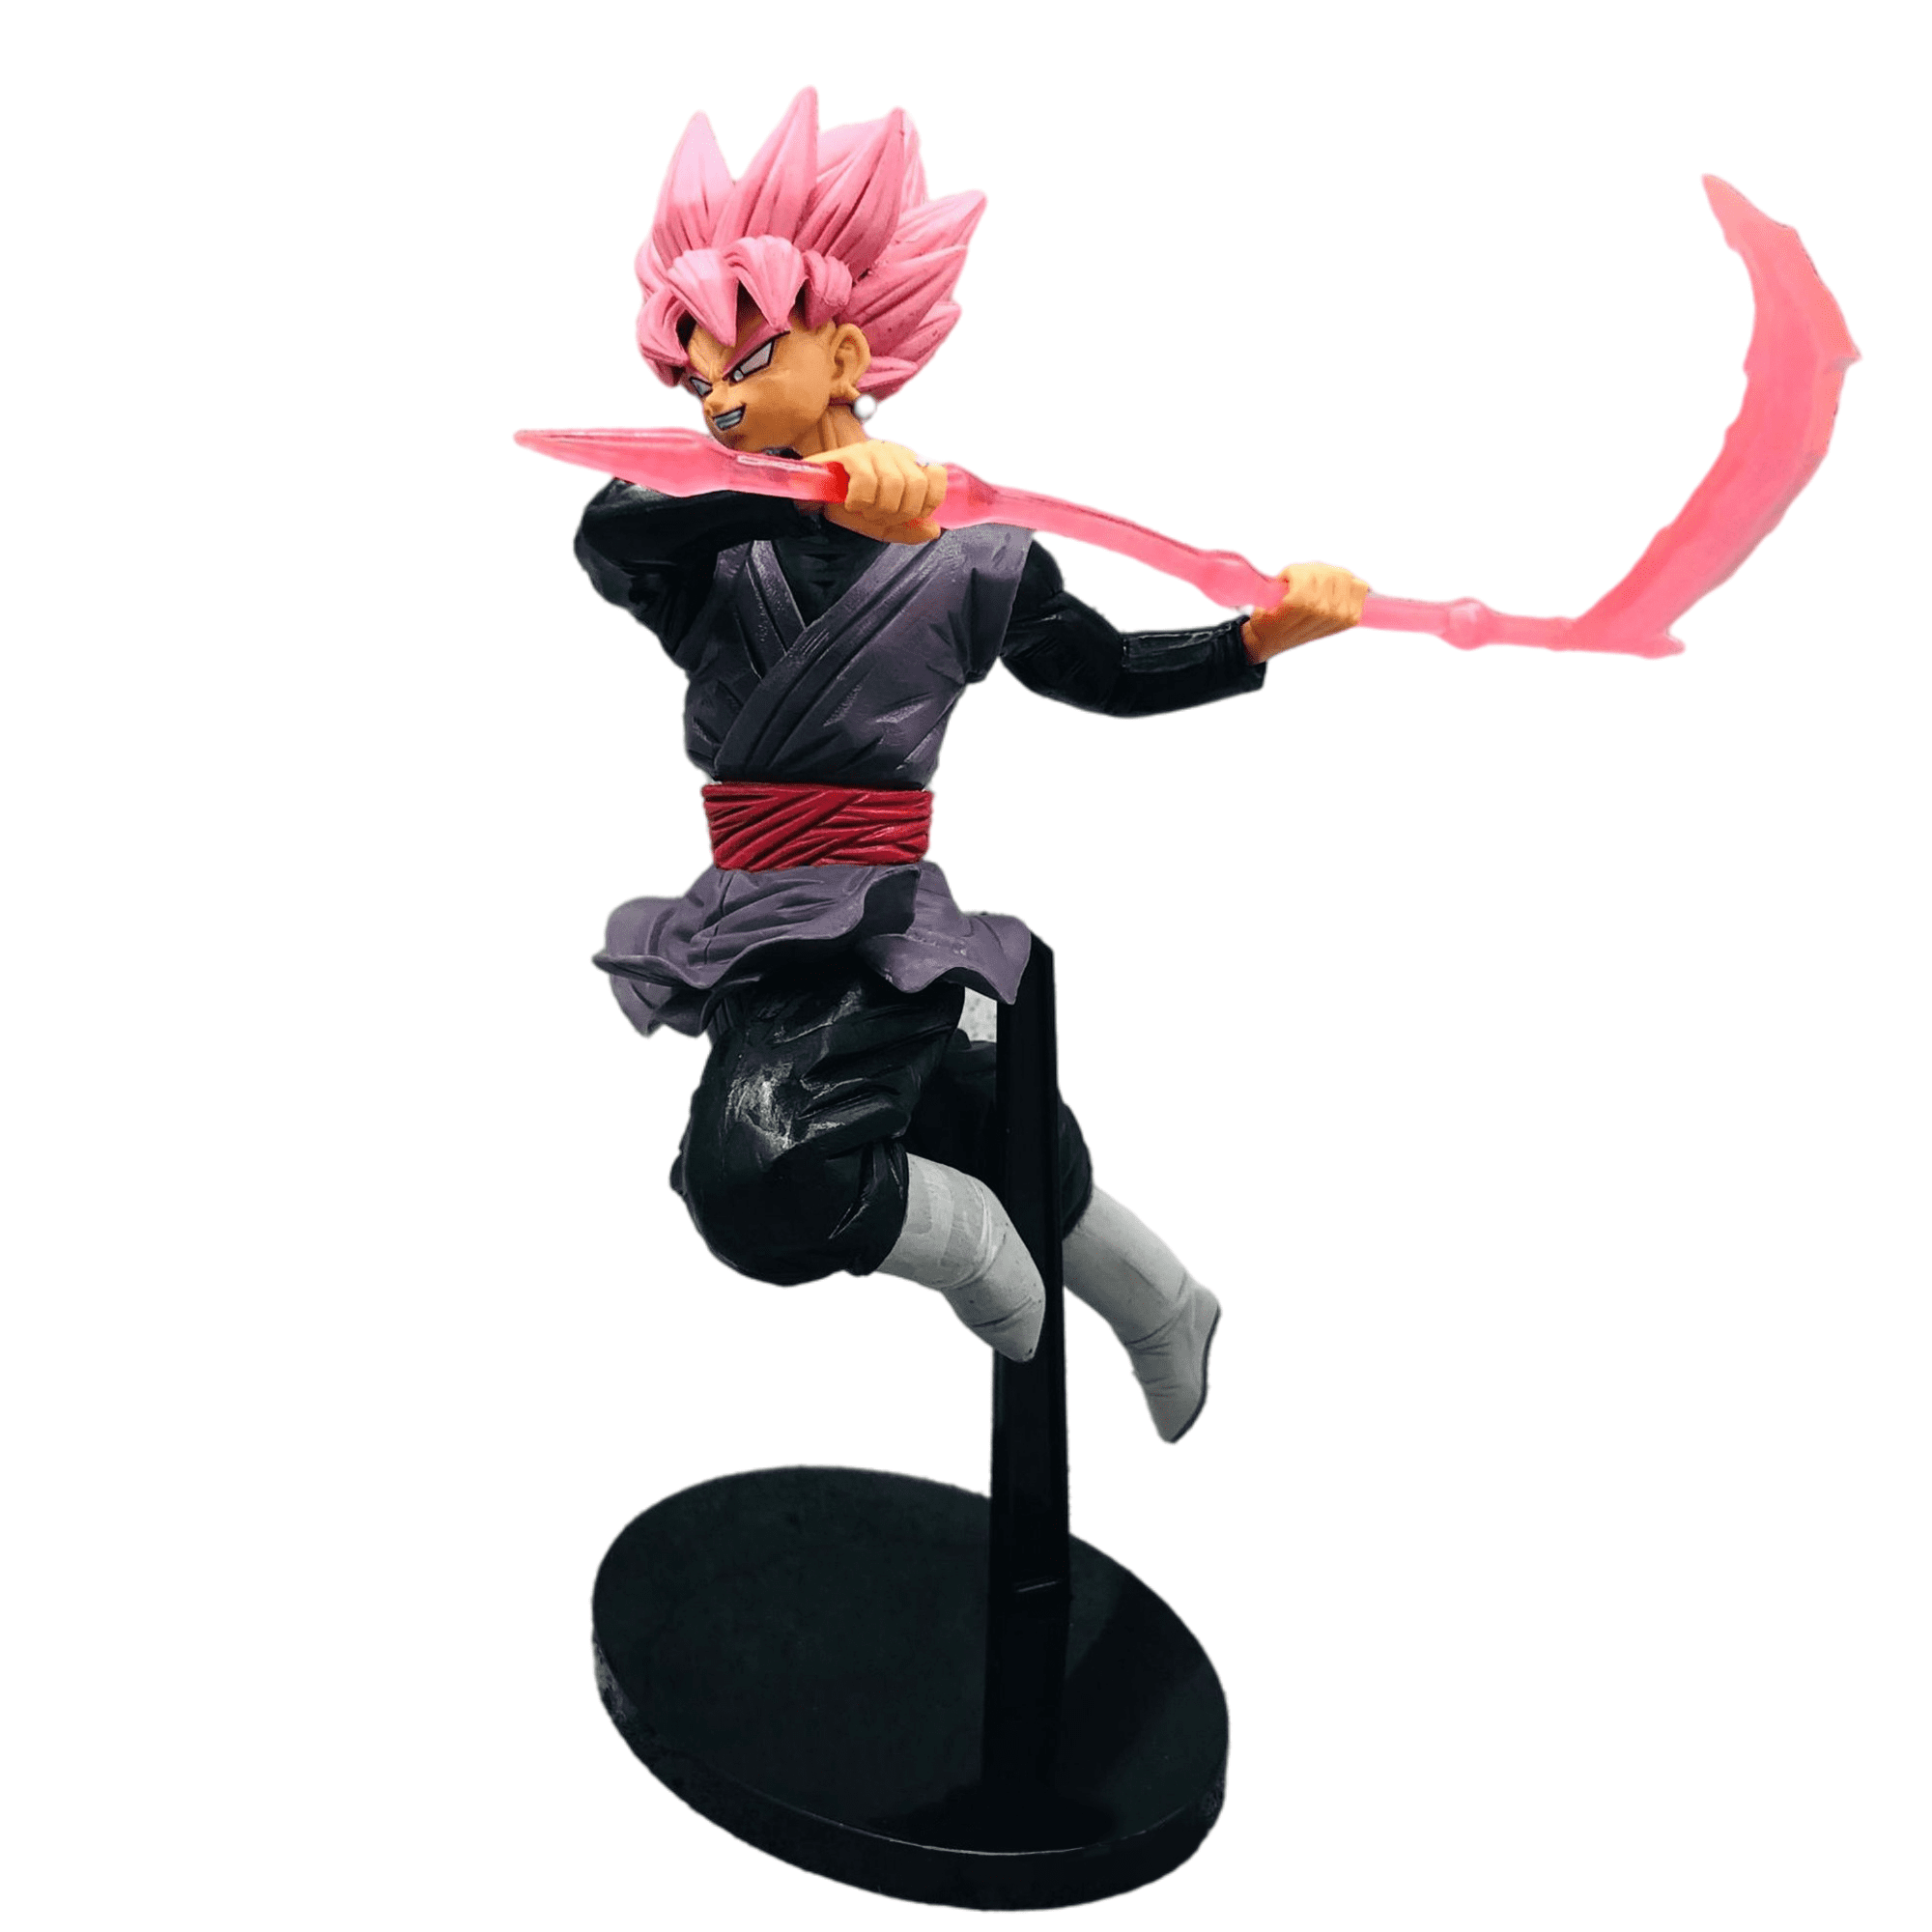 Anime Dragon Ball Z Super Saiyan Son Goku Red Pink hair Figure Action Toy  Gift | eBay